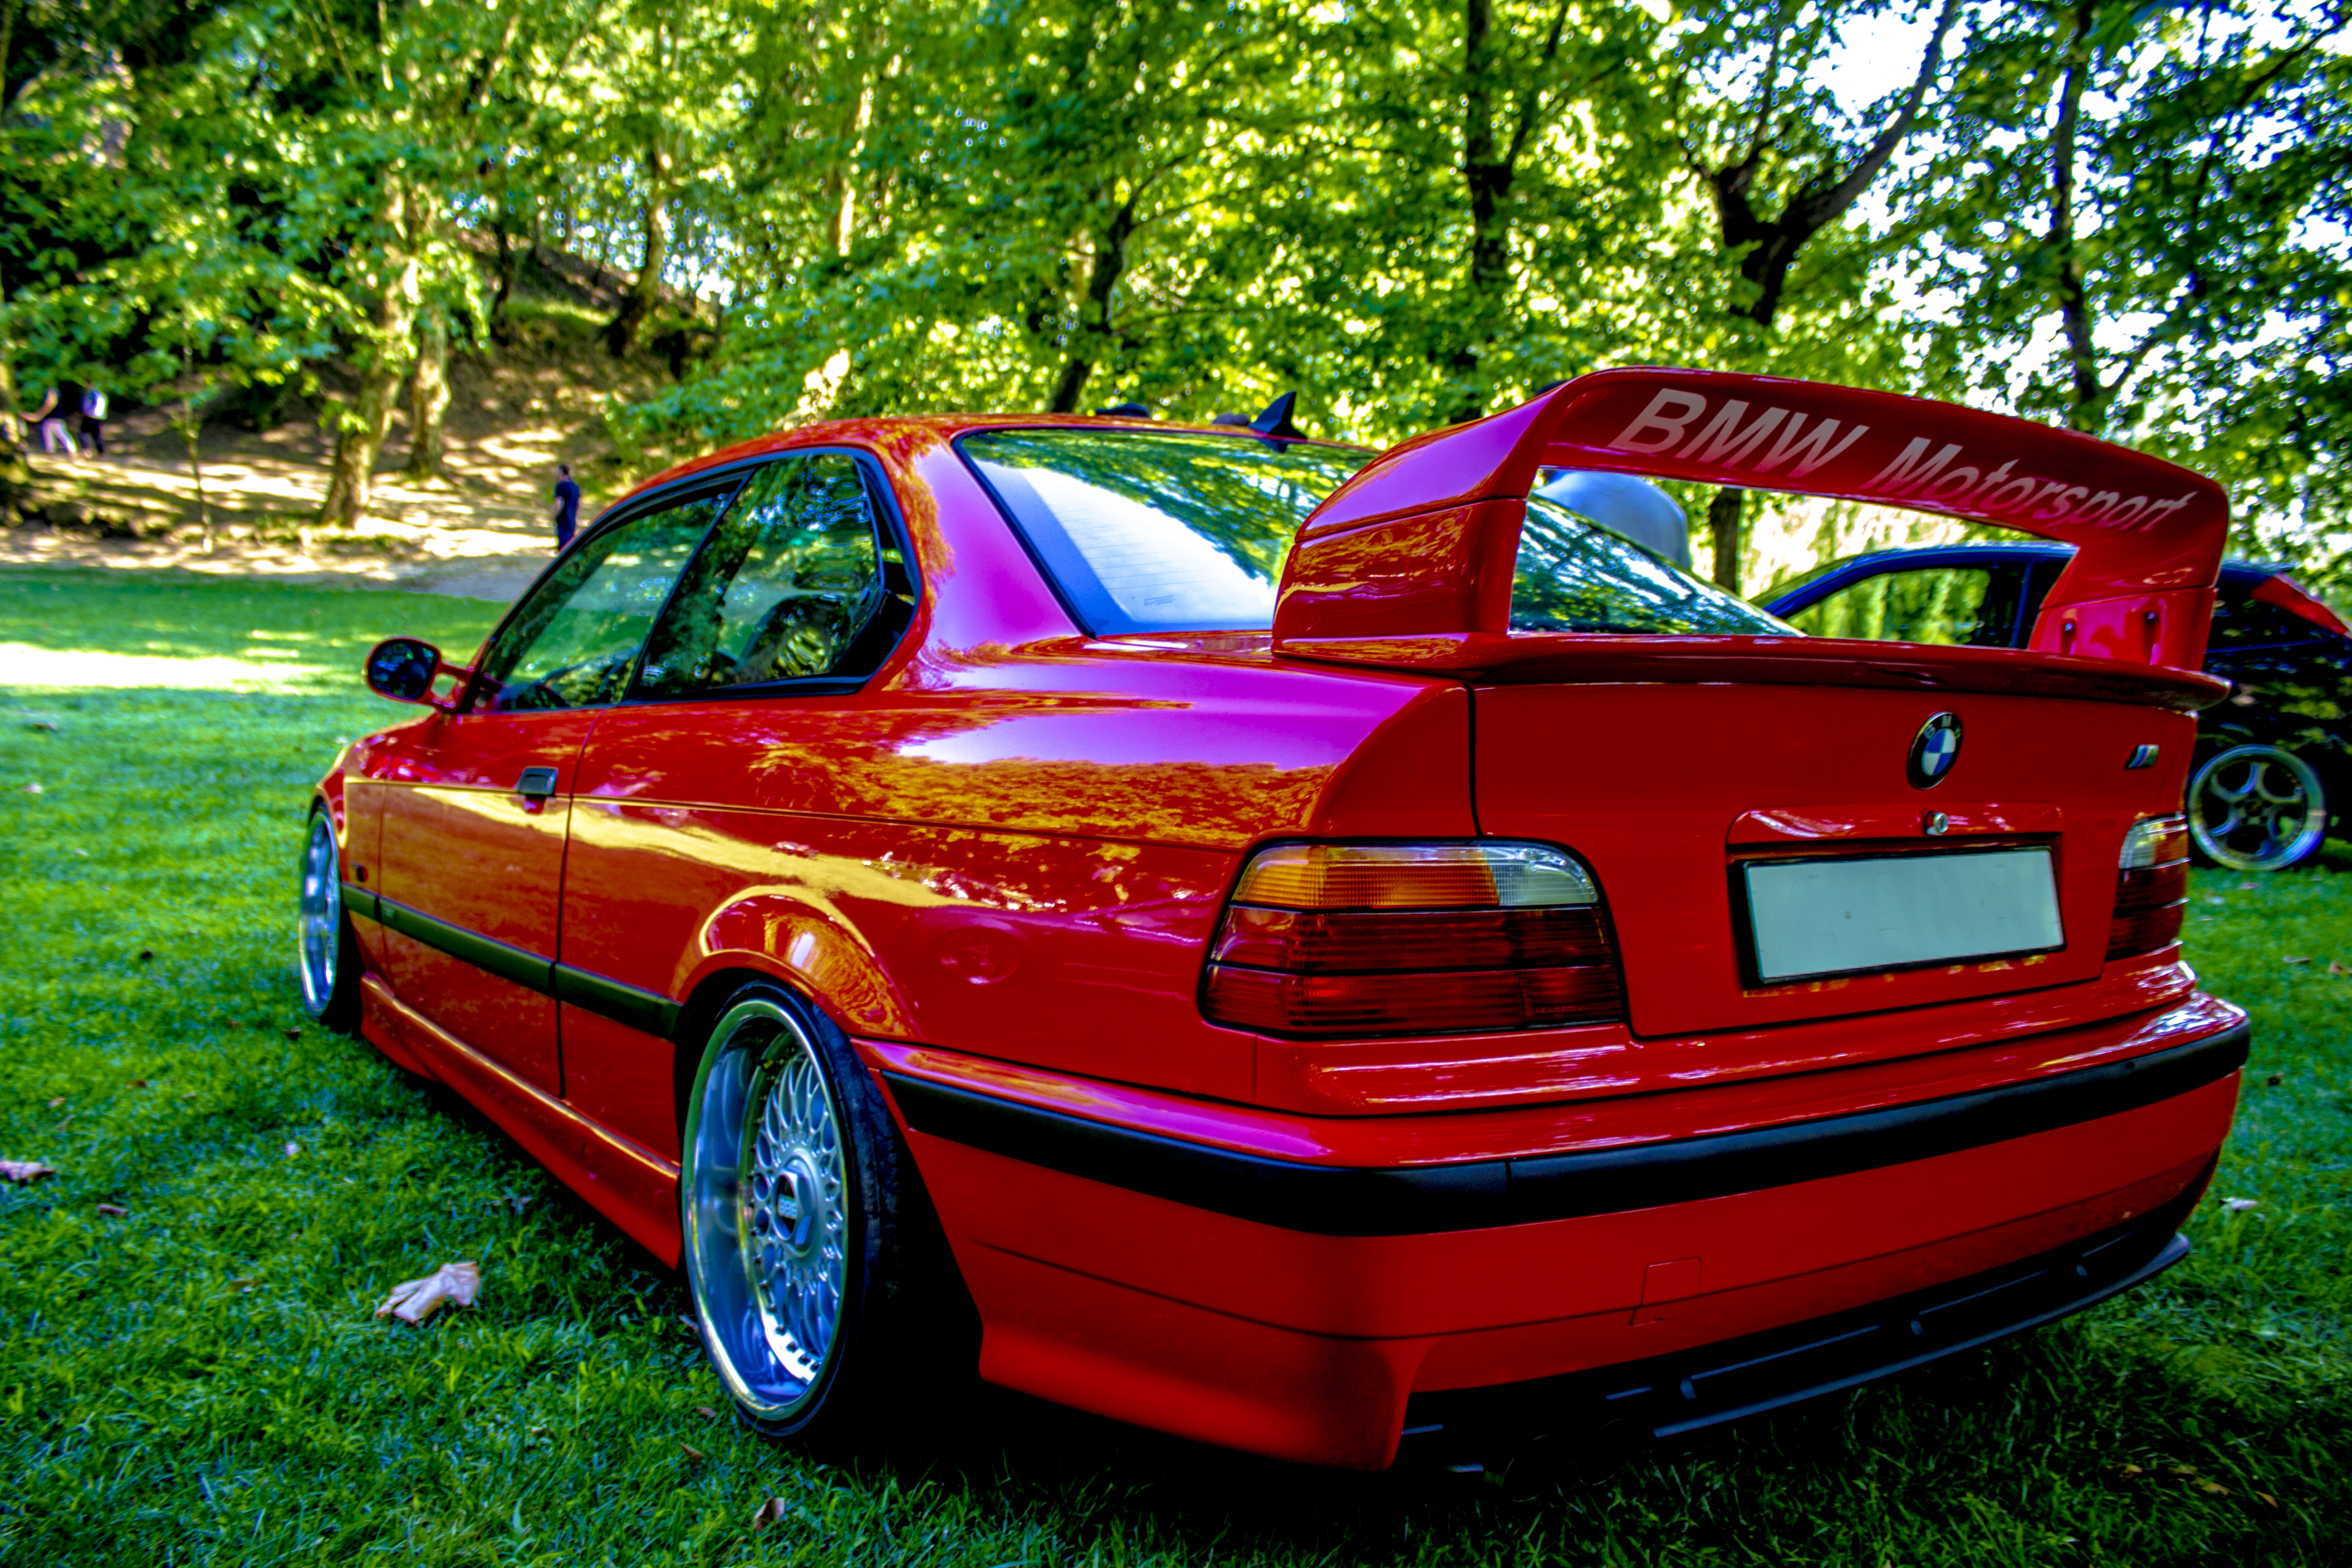 General 5184x3456 BMW red BBS stance (cars) low car BMW 3 Series BMW E36 car